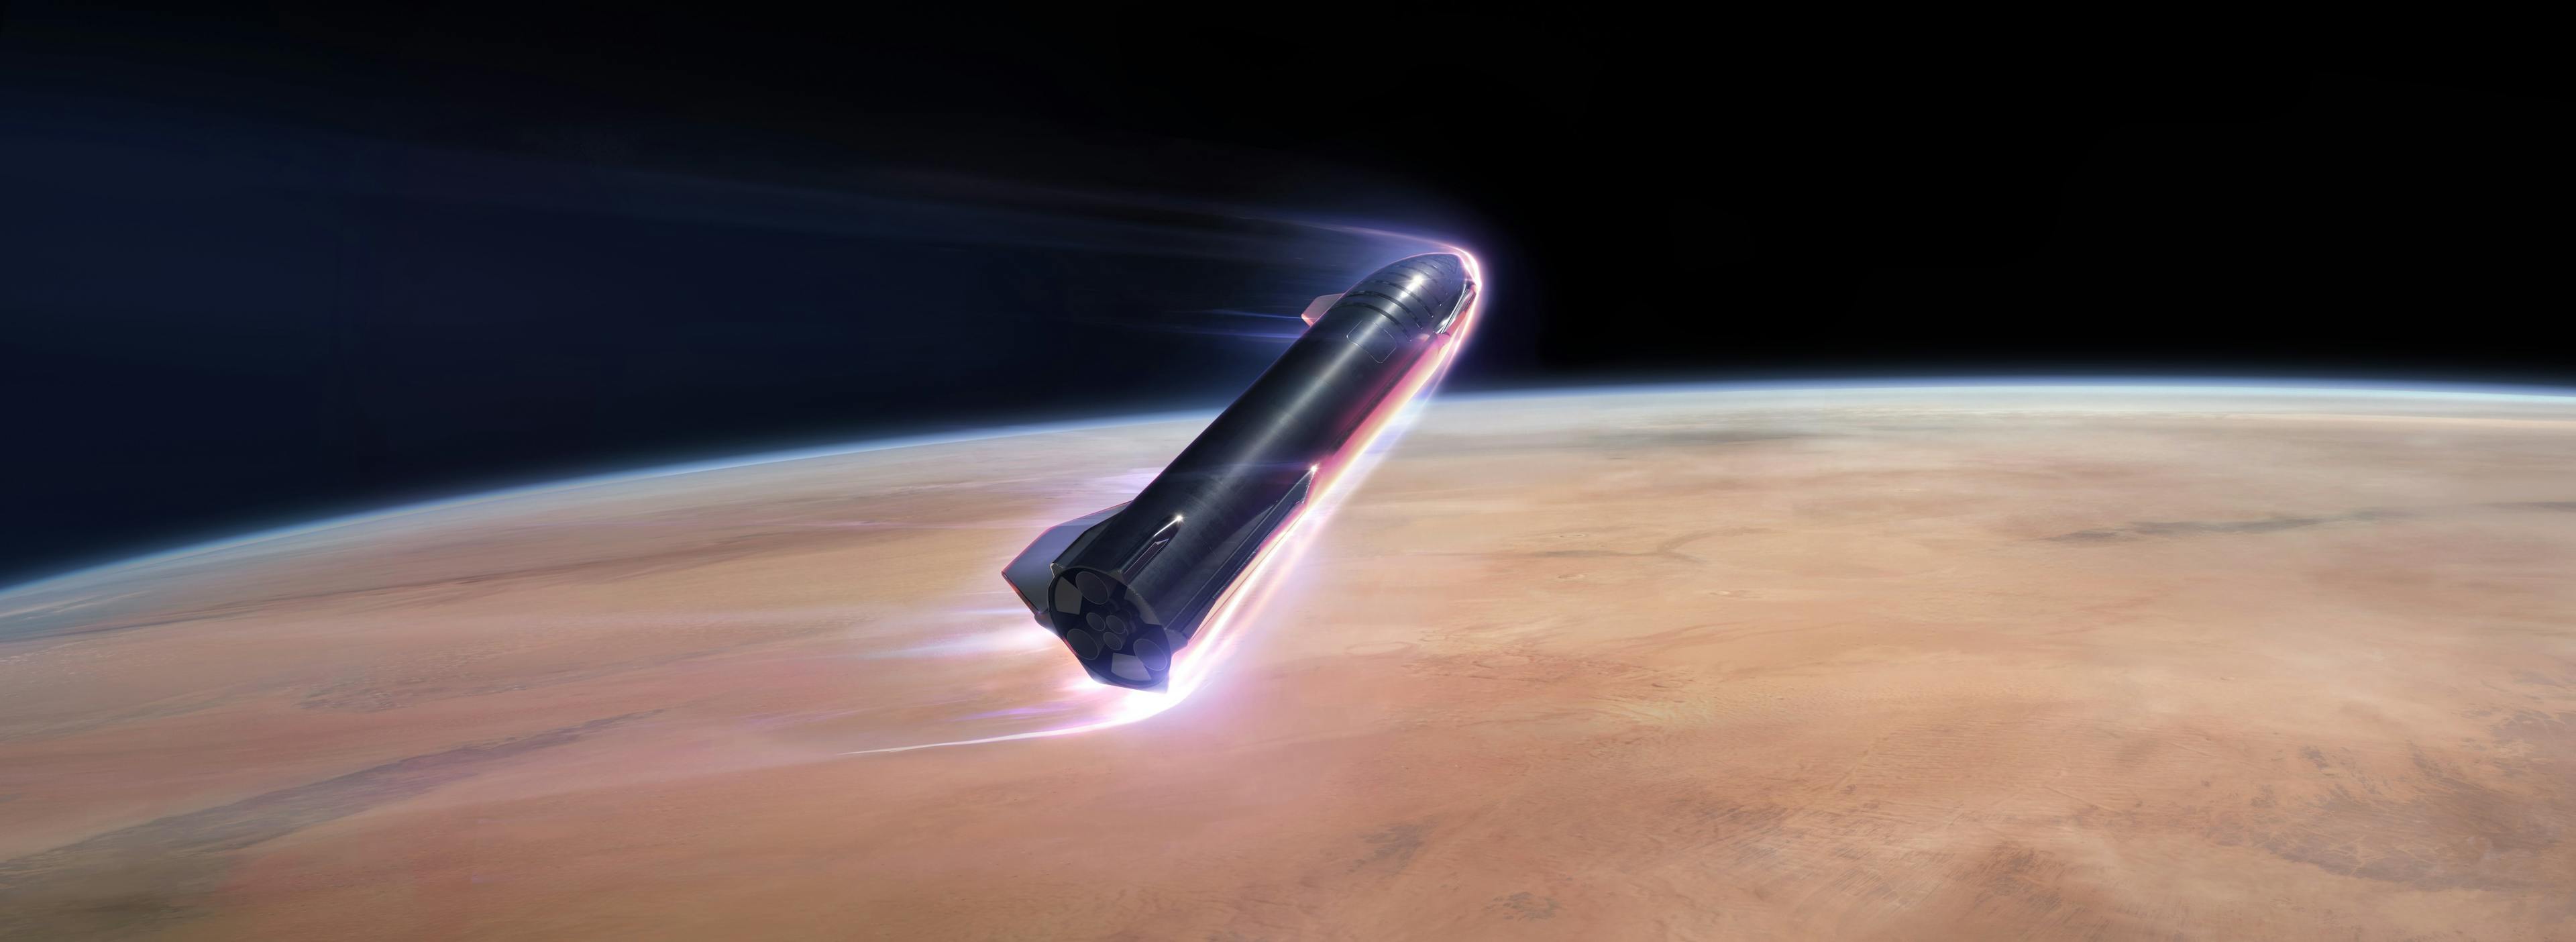 SpaceX' Starship entering Mars atmosphere